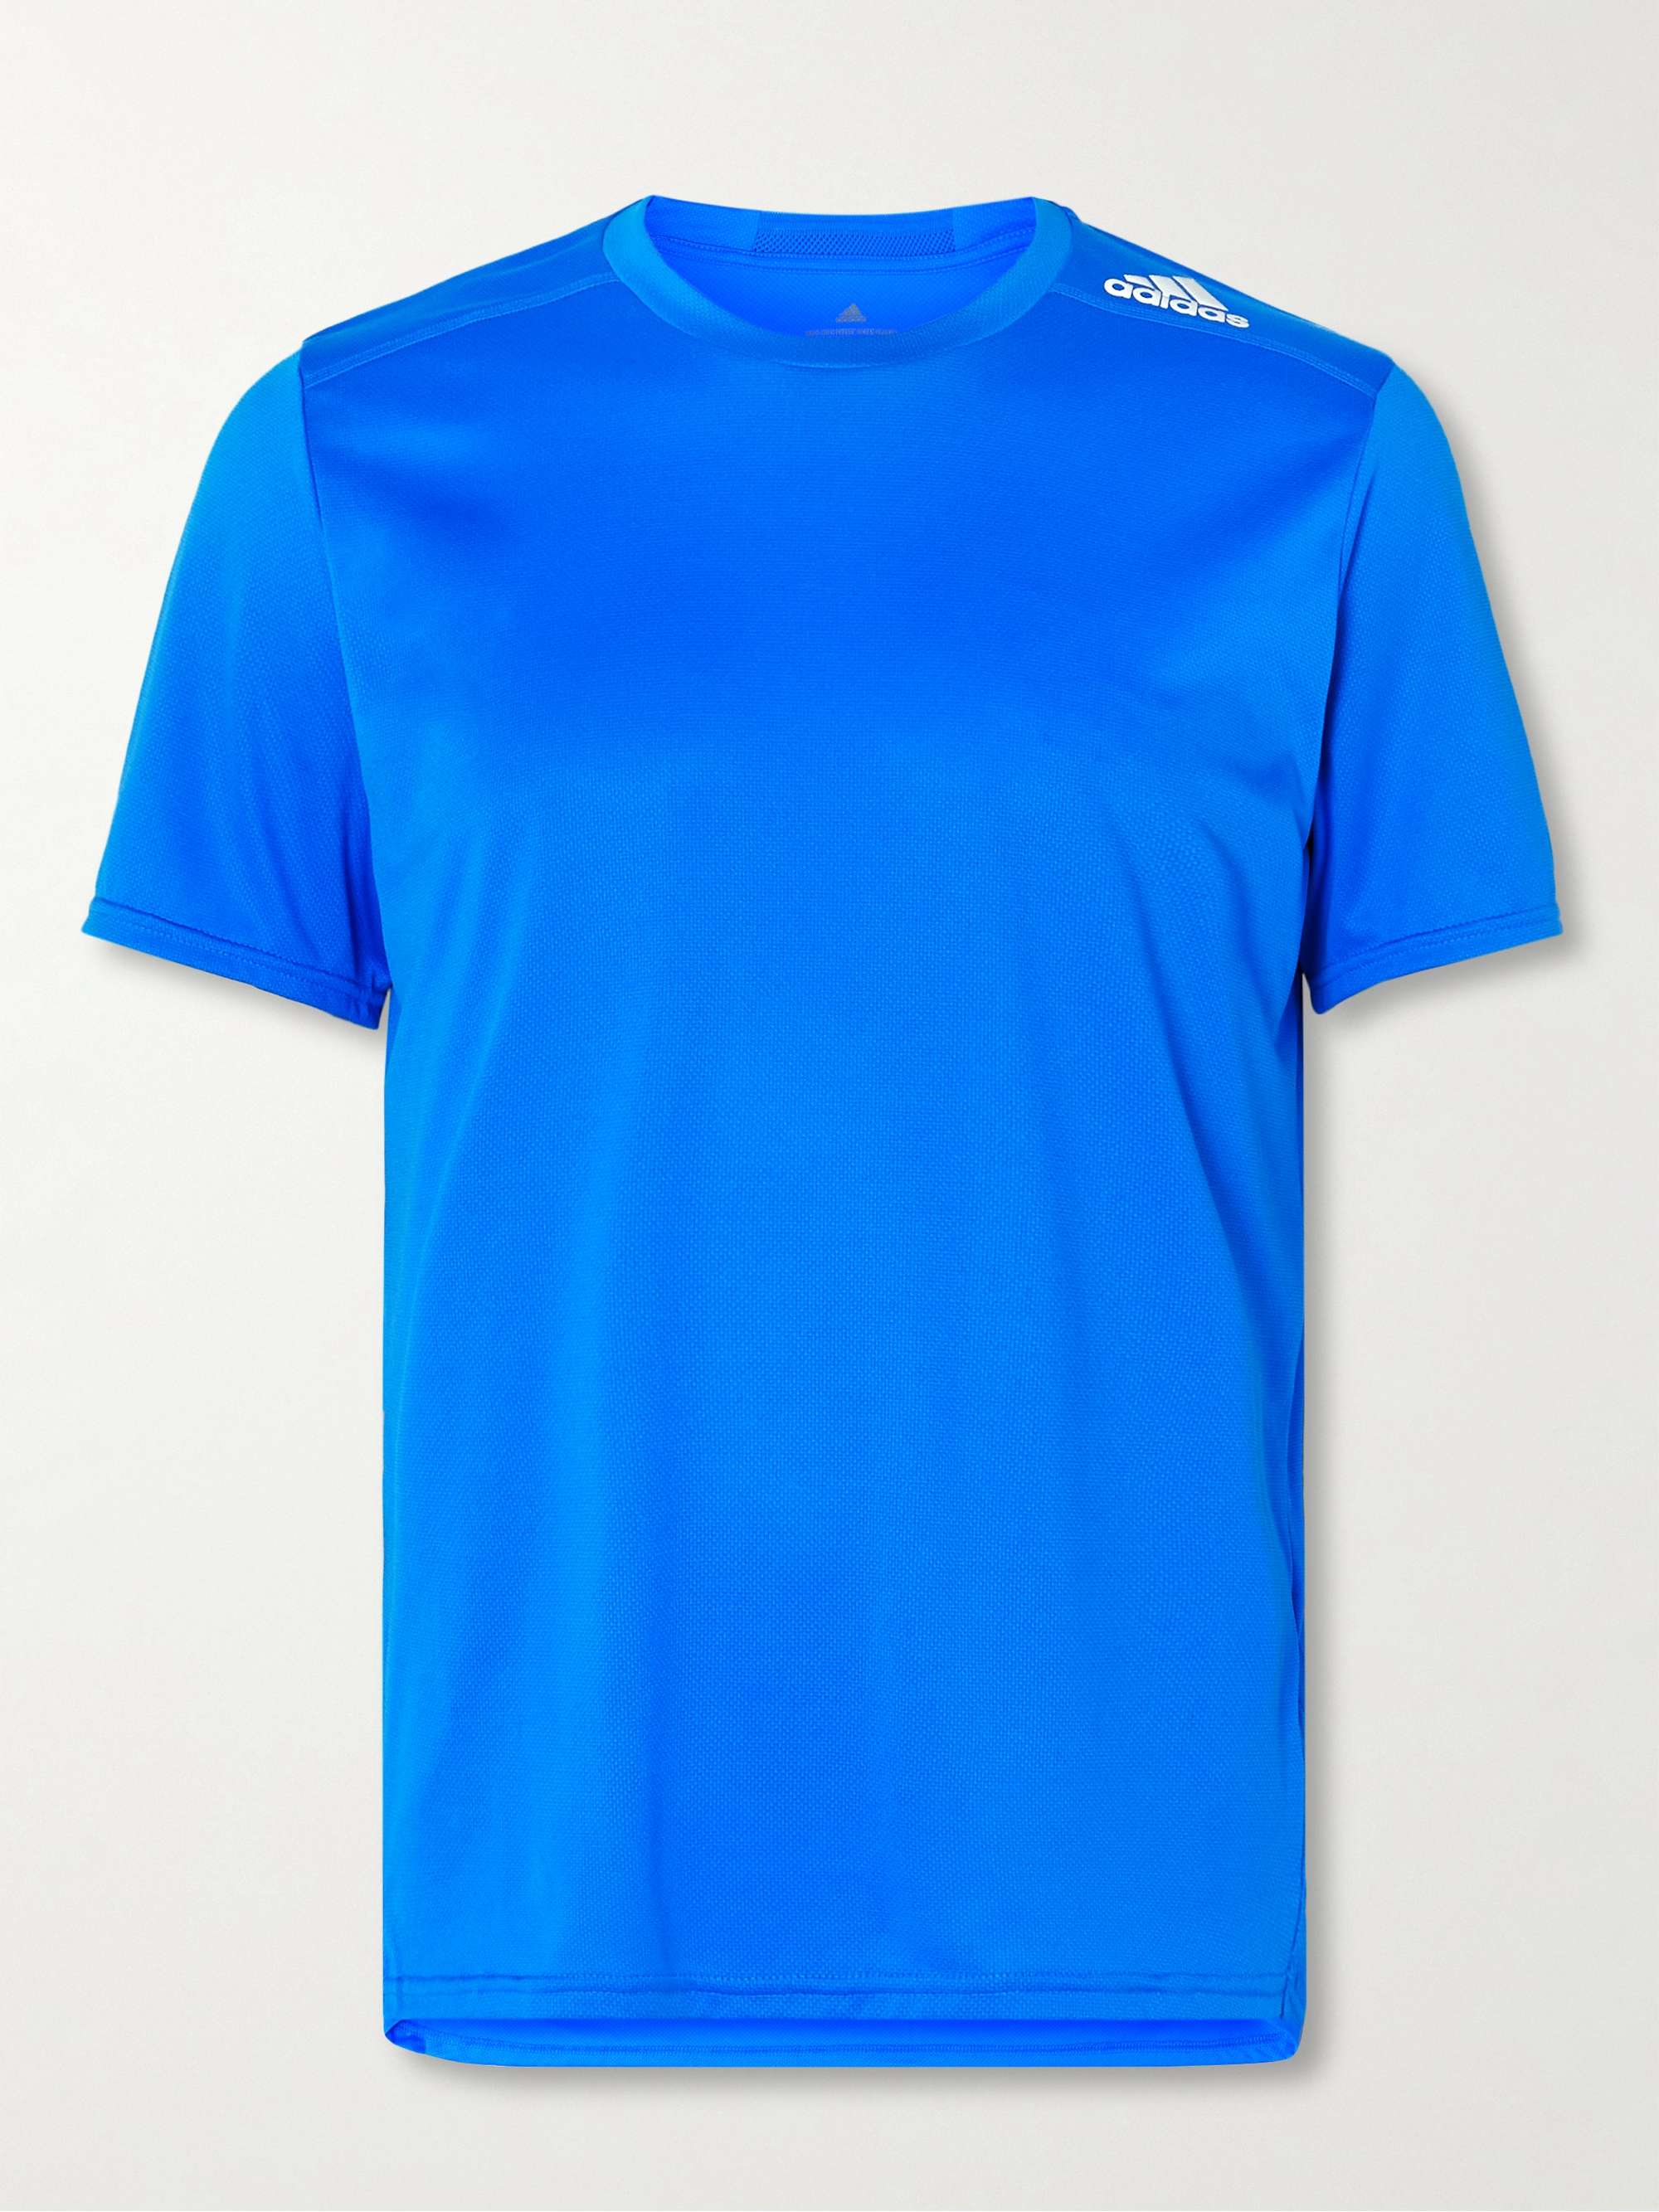 ADIDAS SPORT Designed 4 Running Recycled AEROREADY Jersey T-Shirt